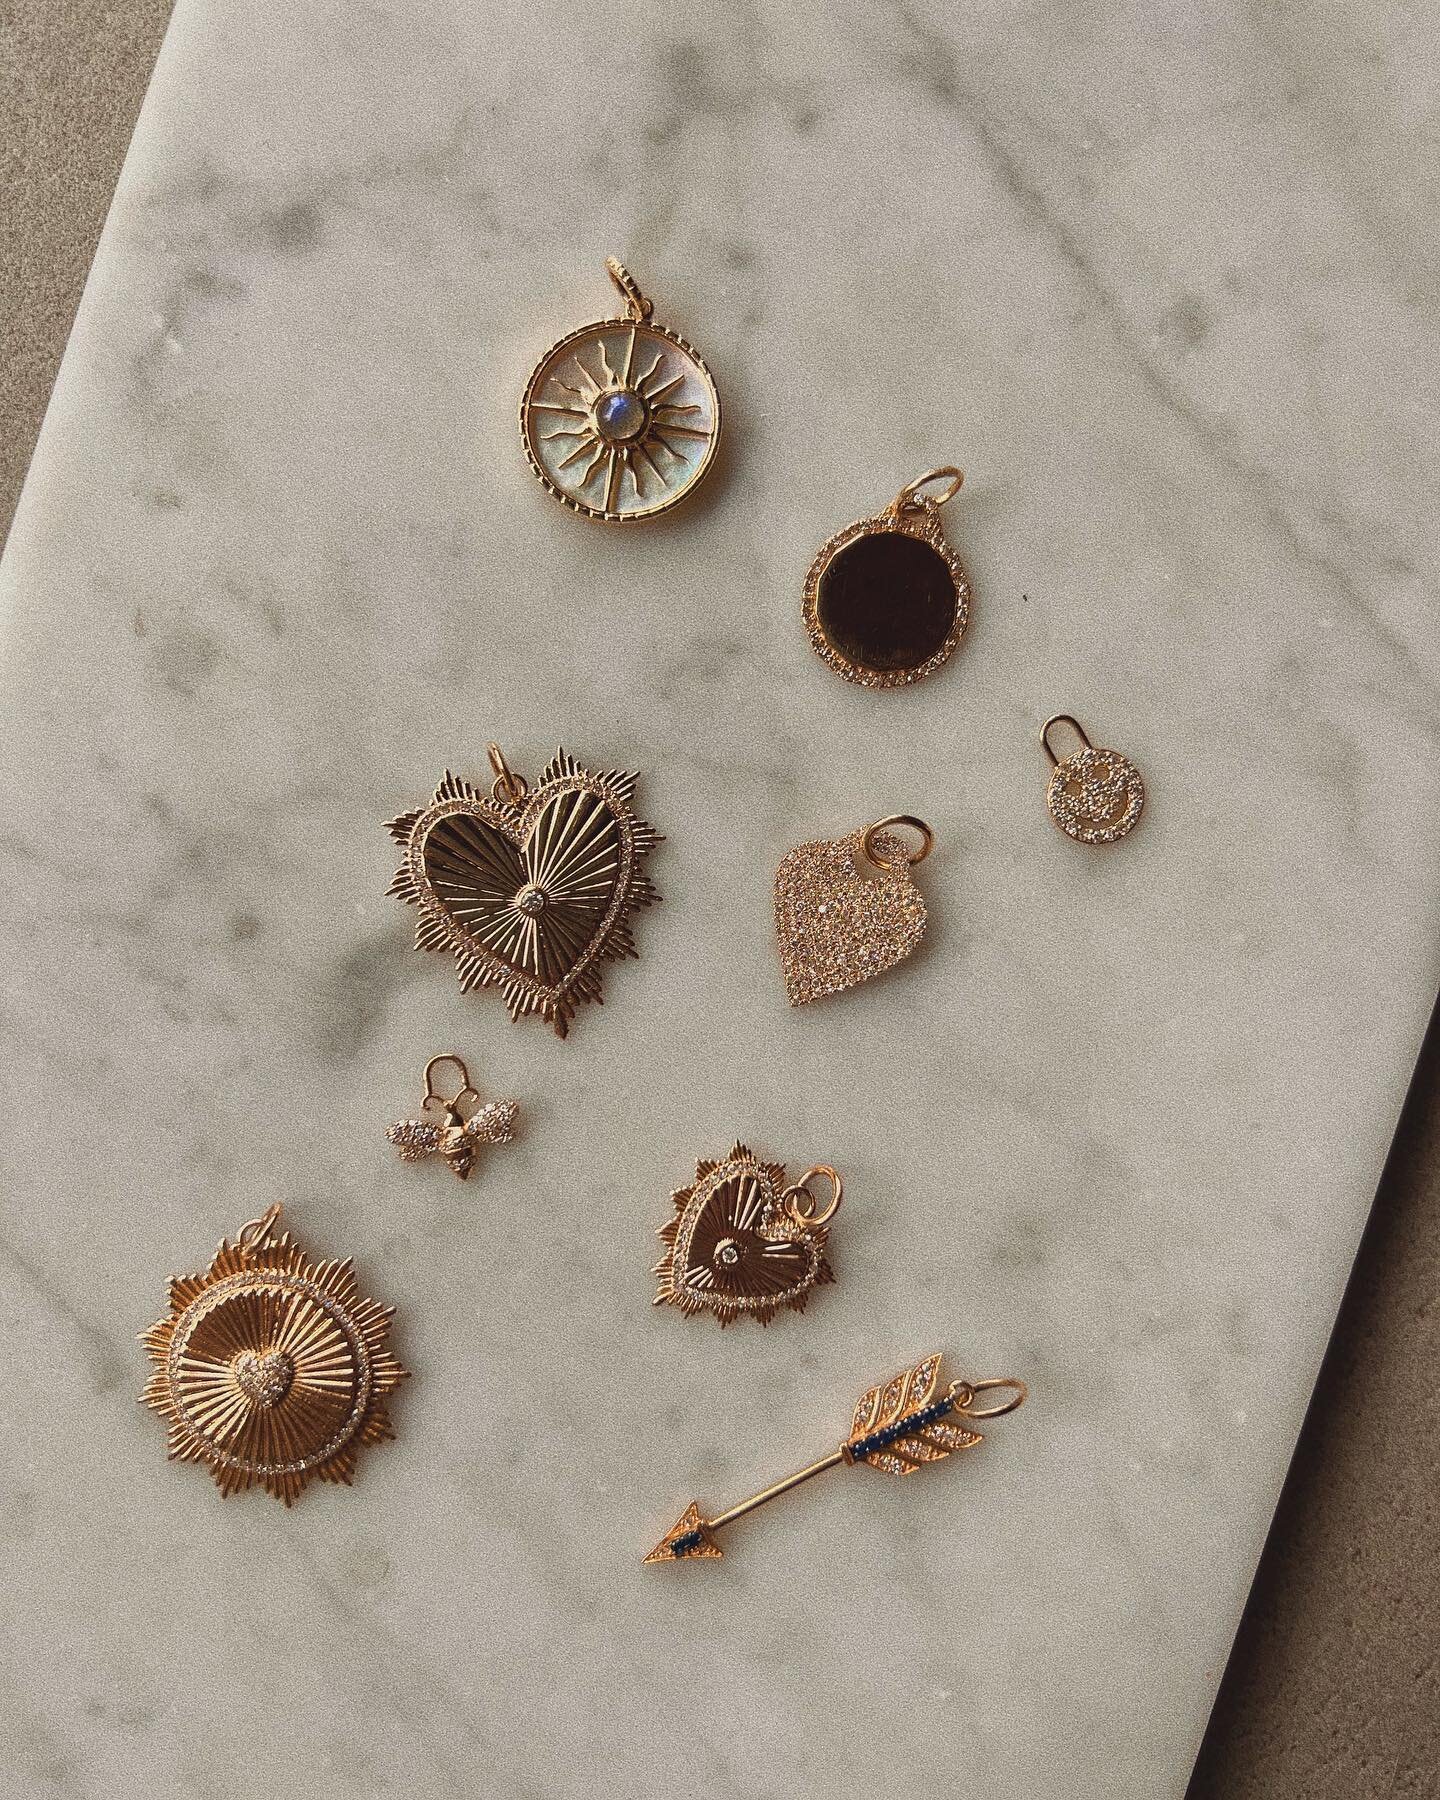 Charms, charms, and more charms🤍

#neckmess #neckmessoftheday #encirkledjewelry